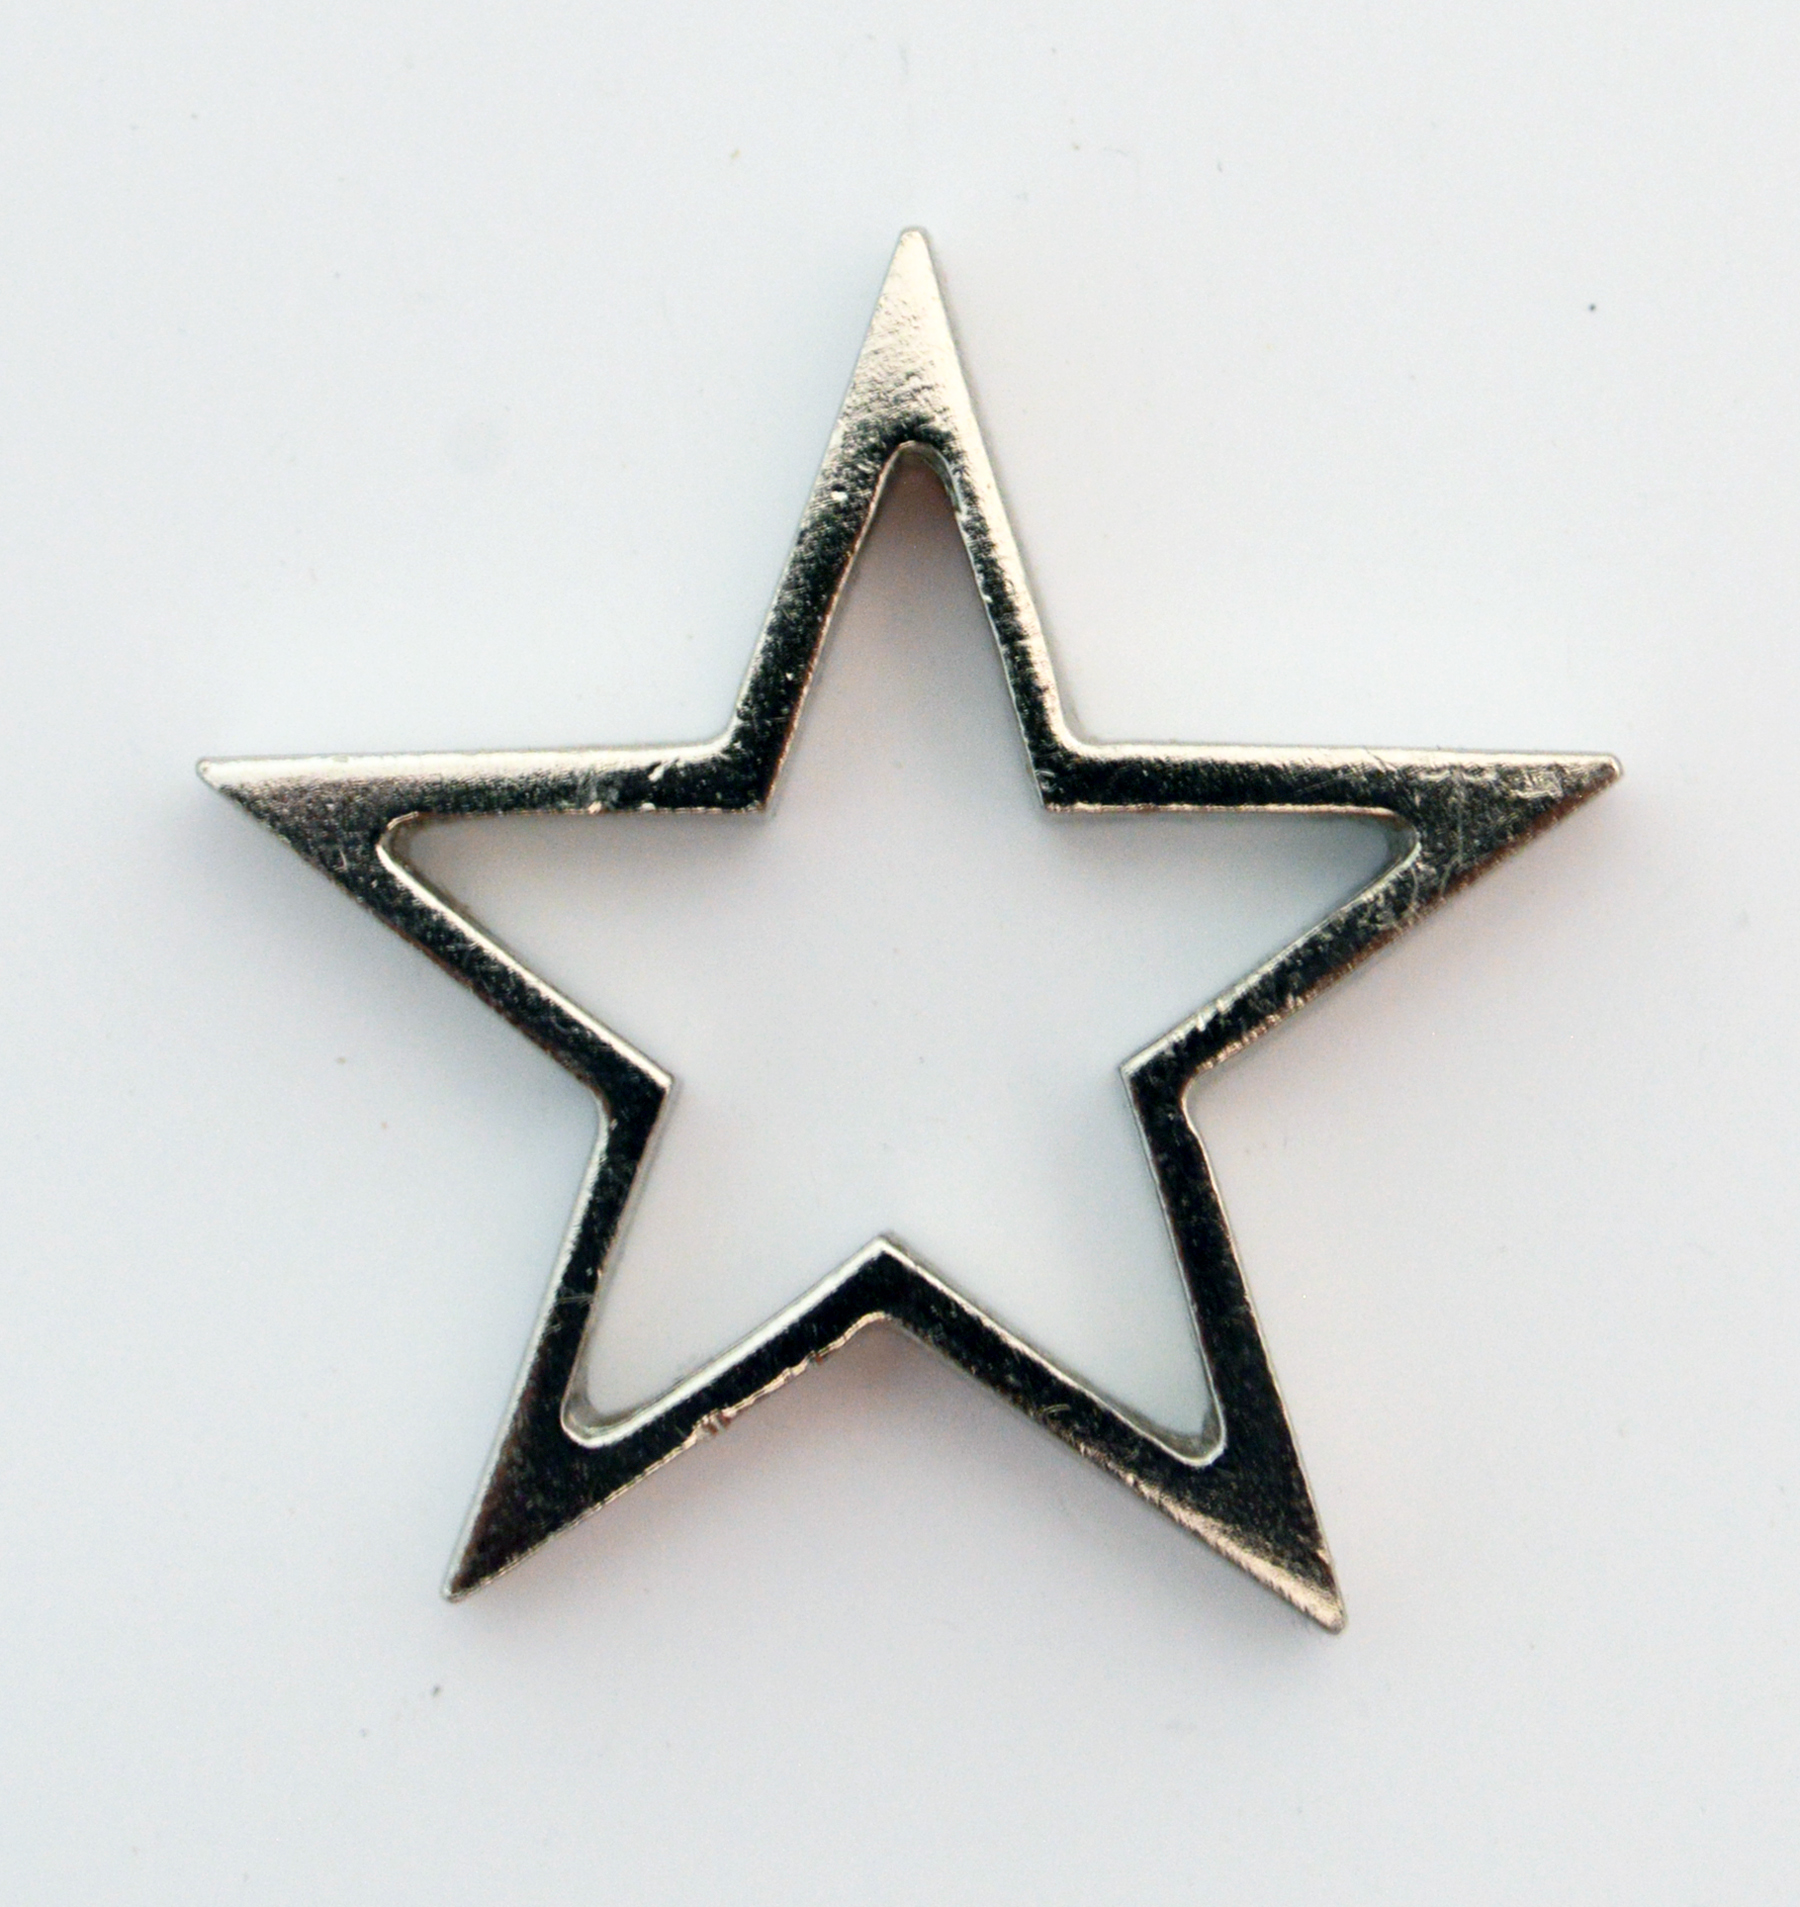 1868-star-ouline-5pt-century-manufacturing